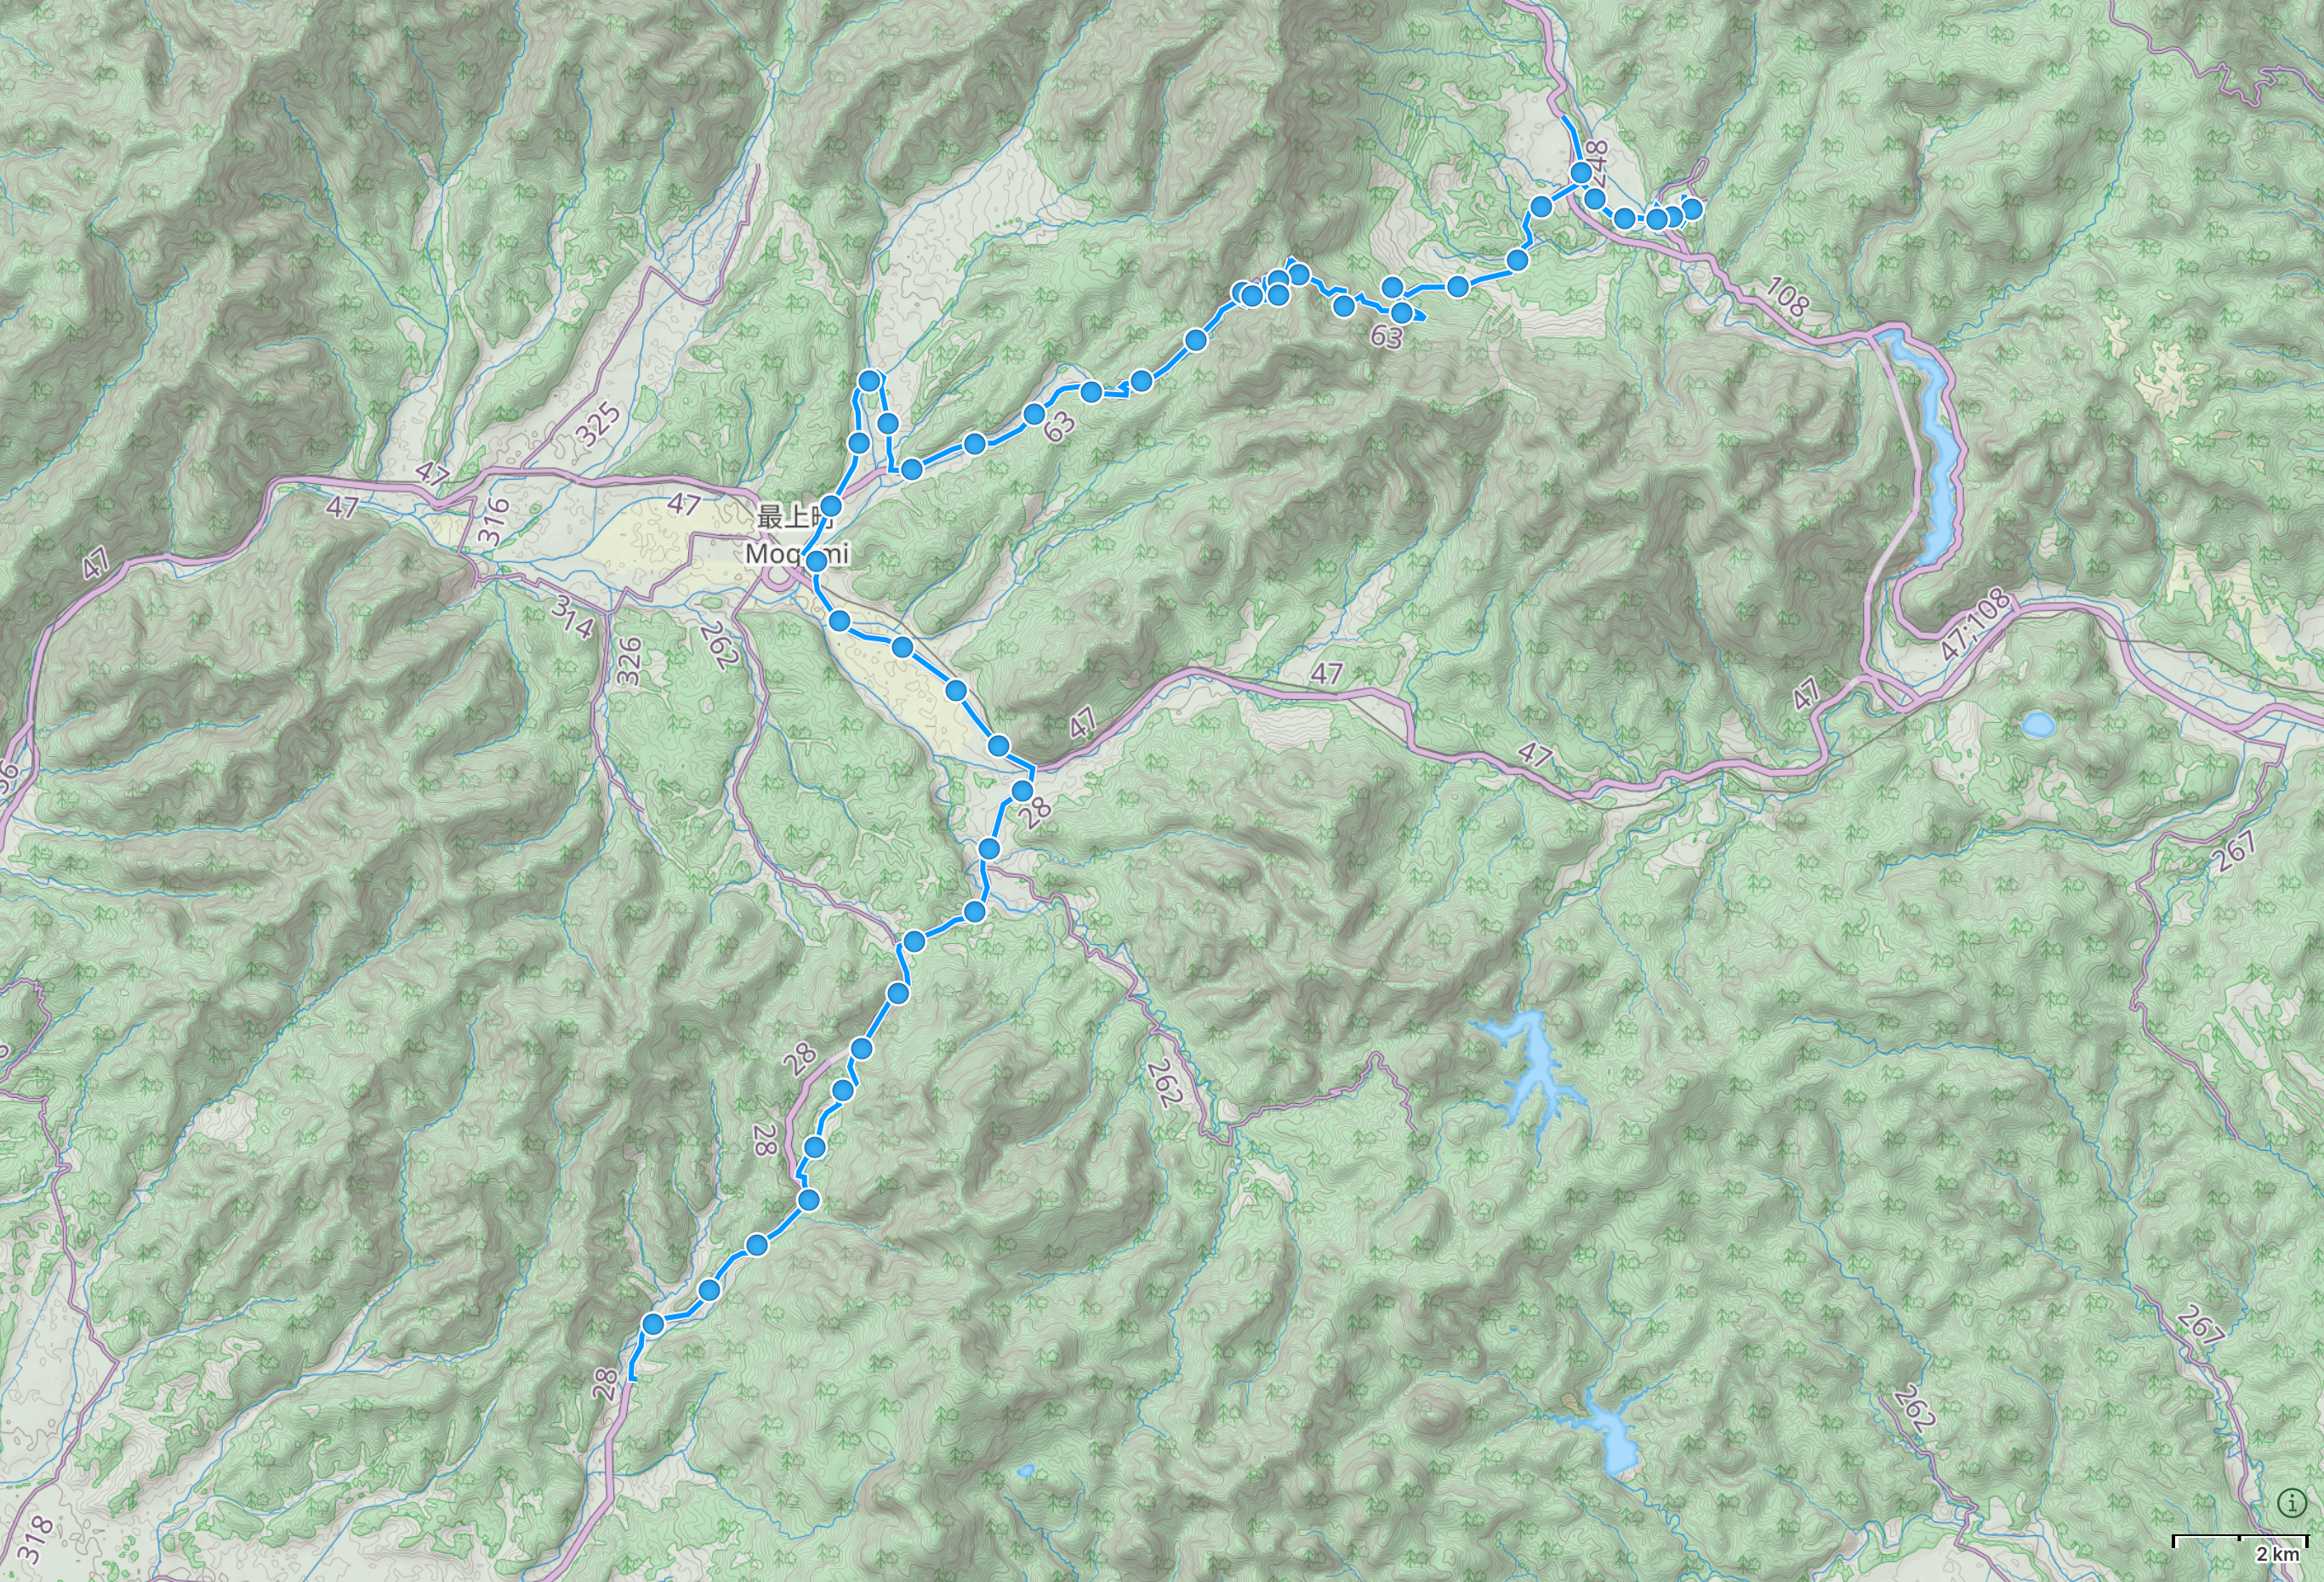 Map of Tōhoku with author’s route from Tomiyama, Yamagata to Onikōbe, Miyagi highlighted.